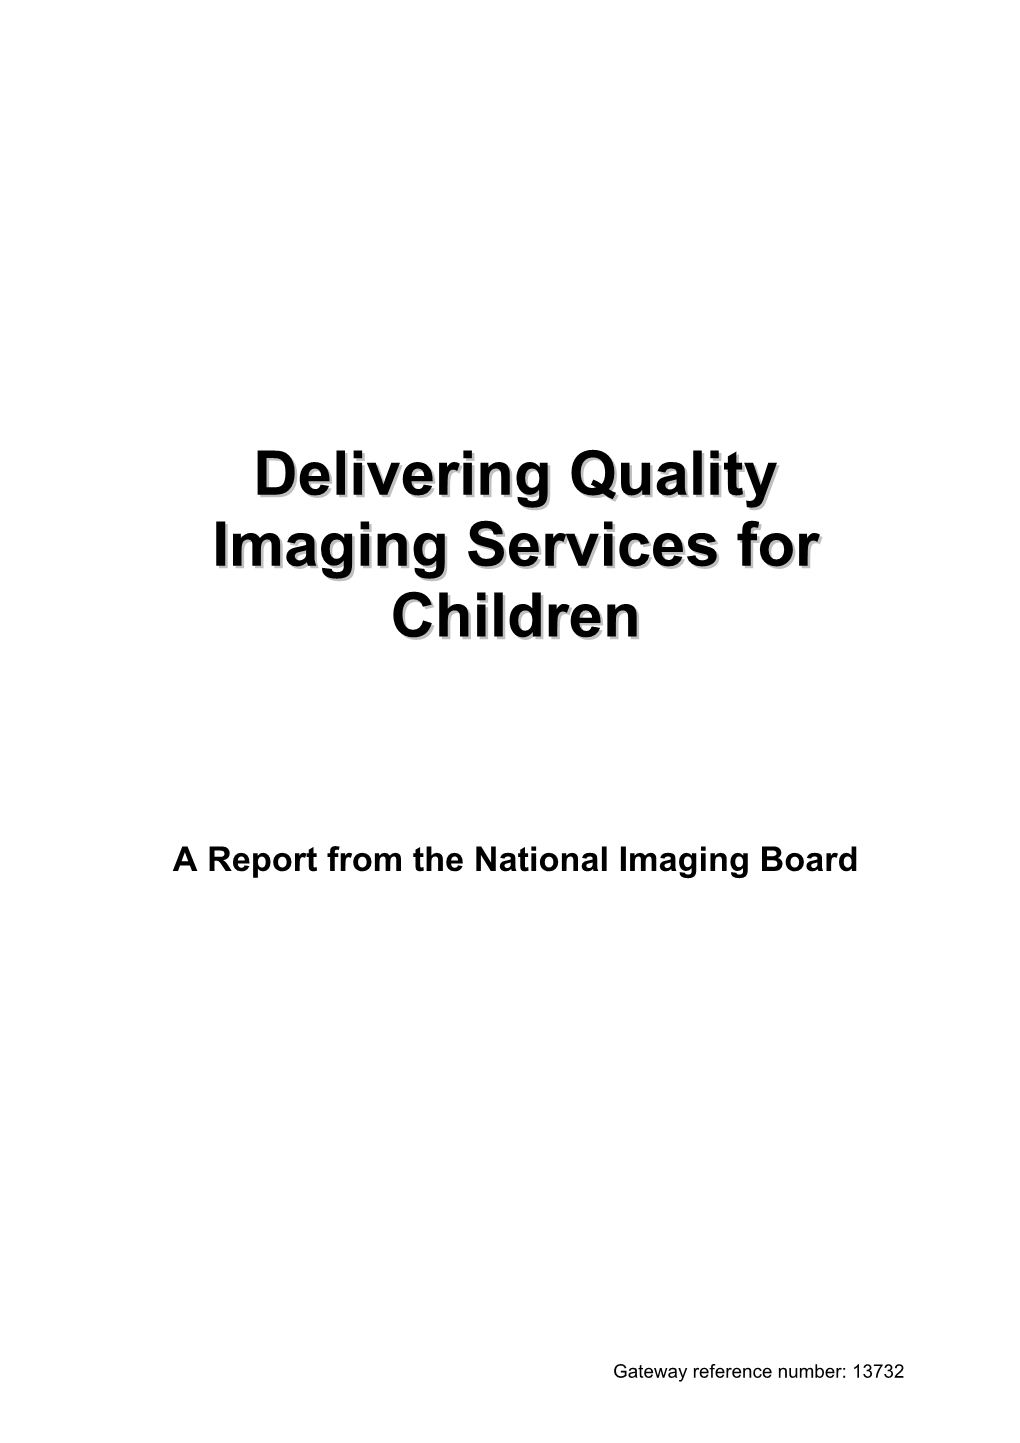 Delivering Quality Imaging Services for Children